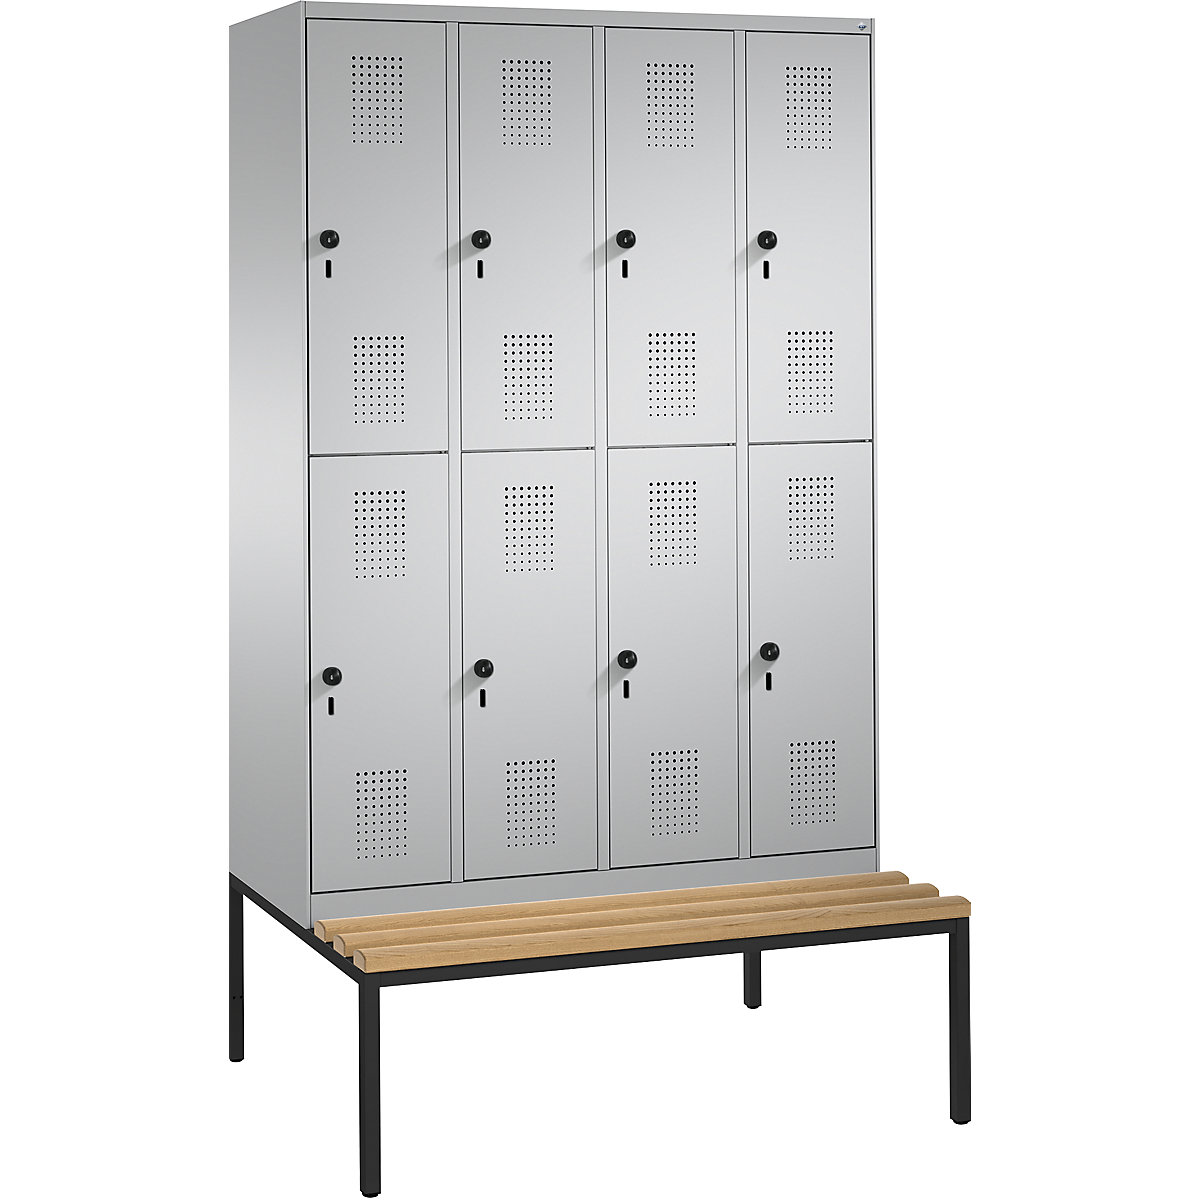 EVOLO cloakroom locker, double tier, with bench – C+P, 4 compartments, 2 shelf compartments each, compartment width 300 mm, white aluminium / white aluminium-3